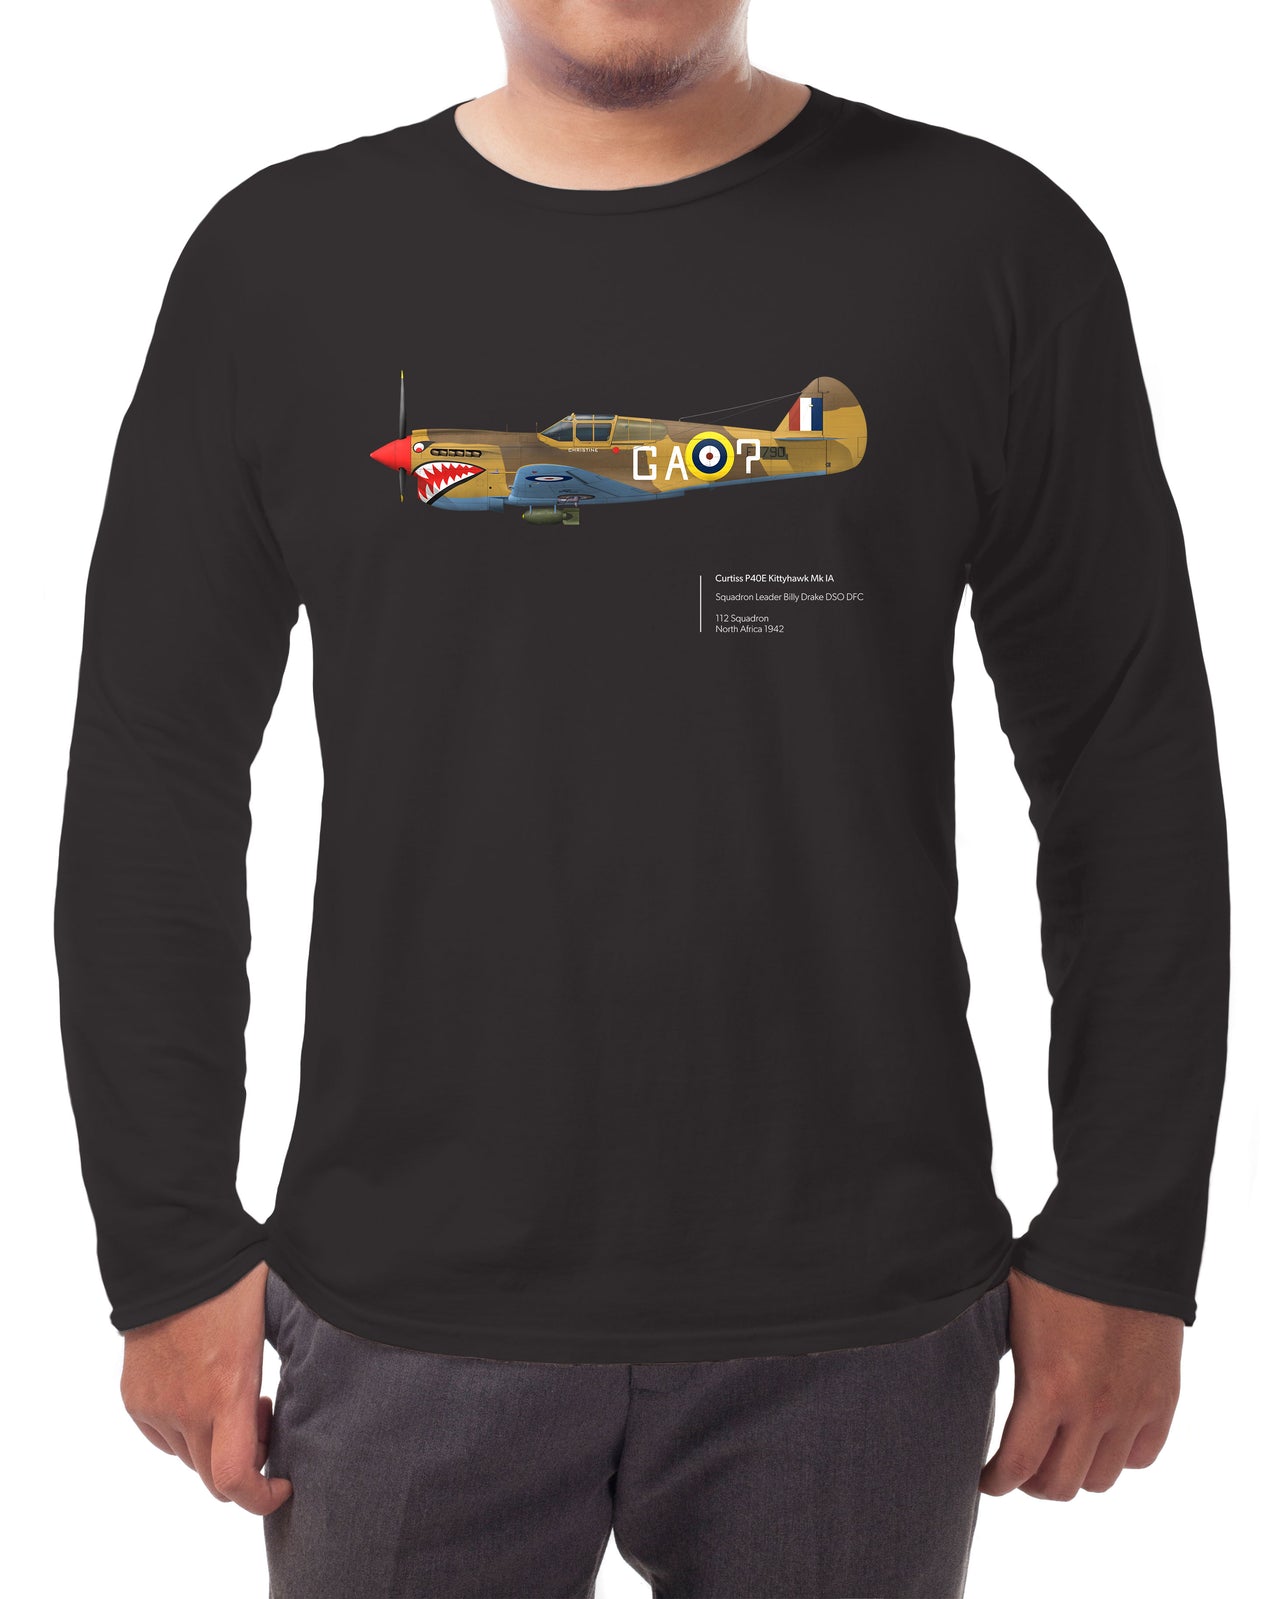 Kittyhawk MK IA - Long-sleeve T-shirt